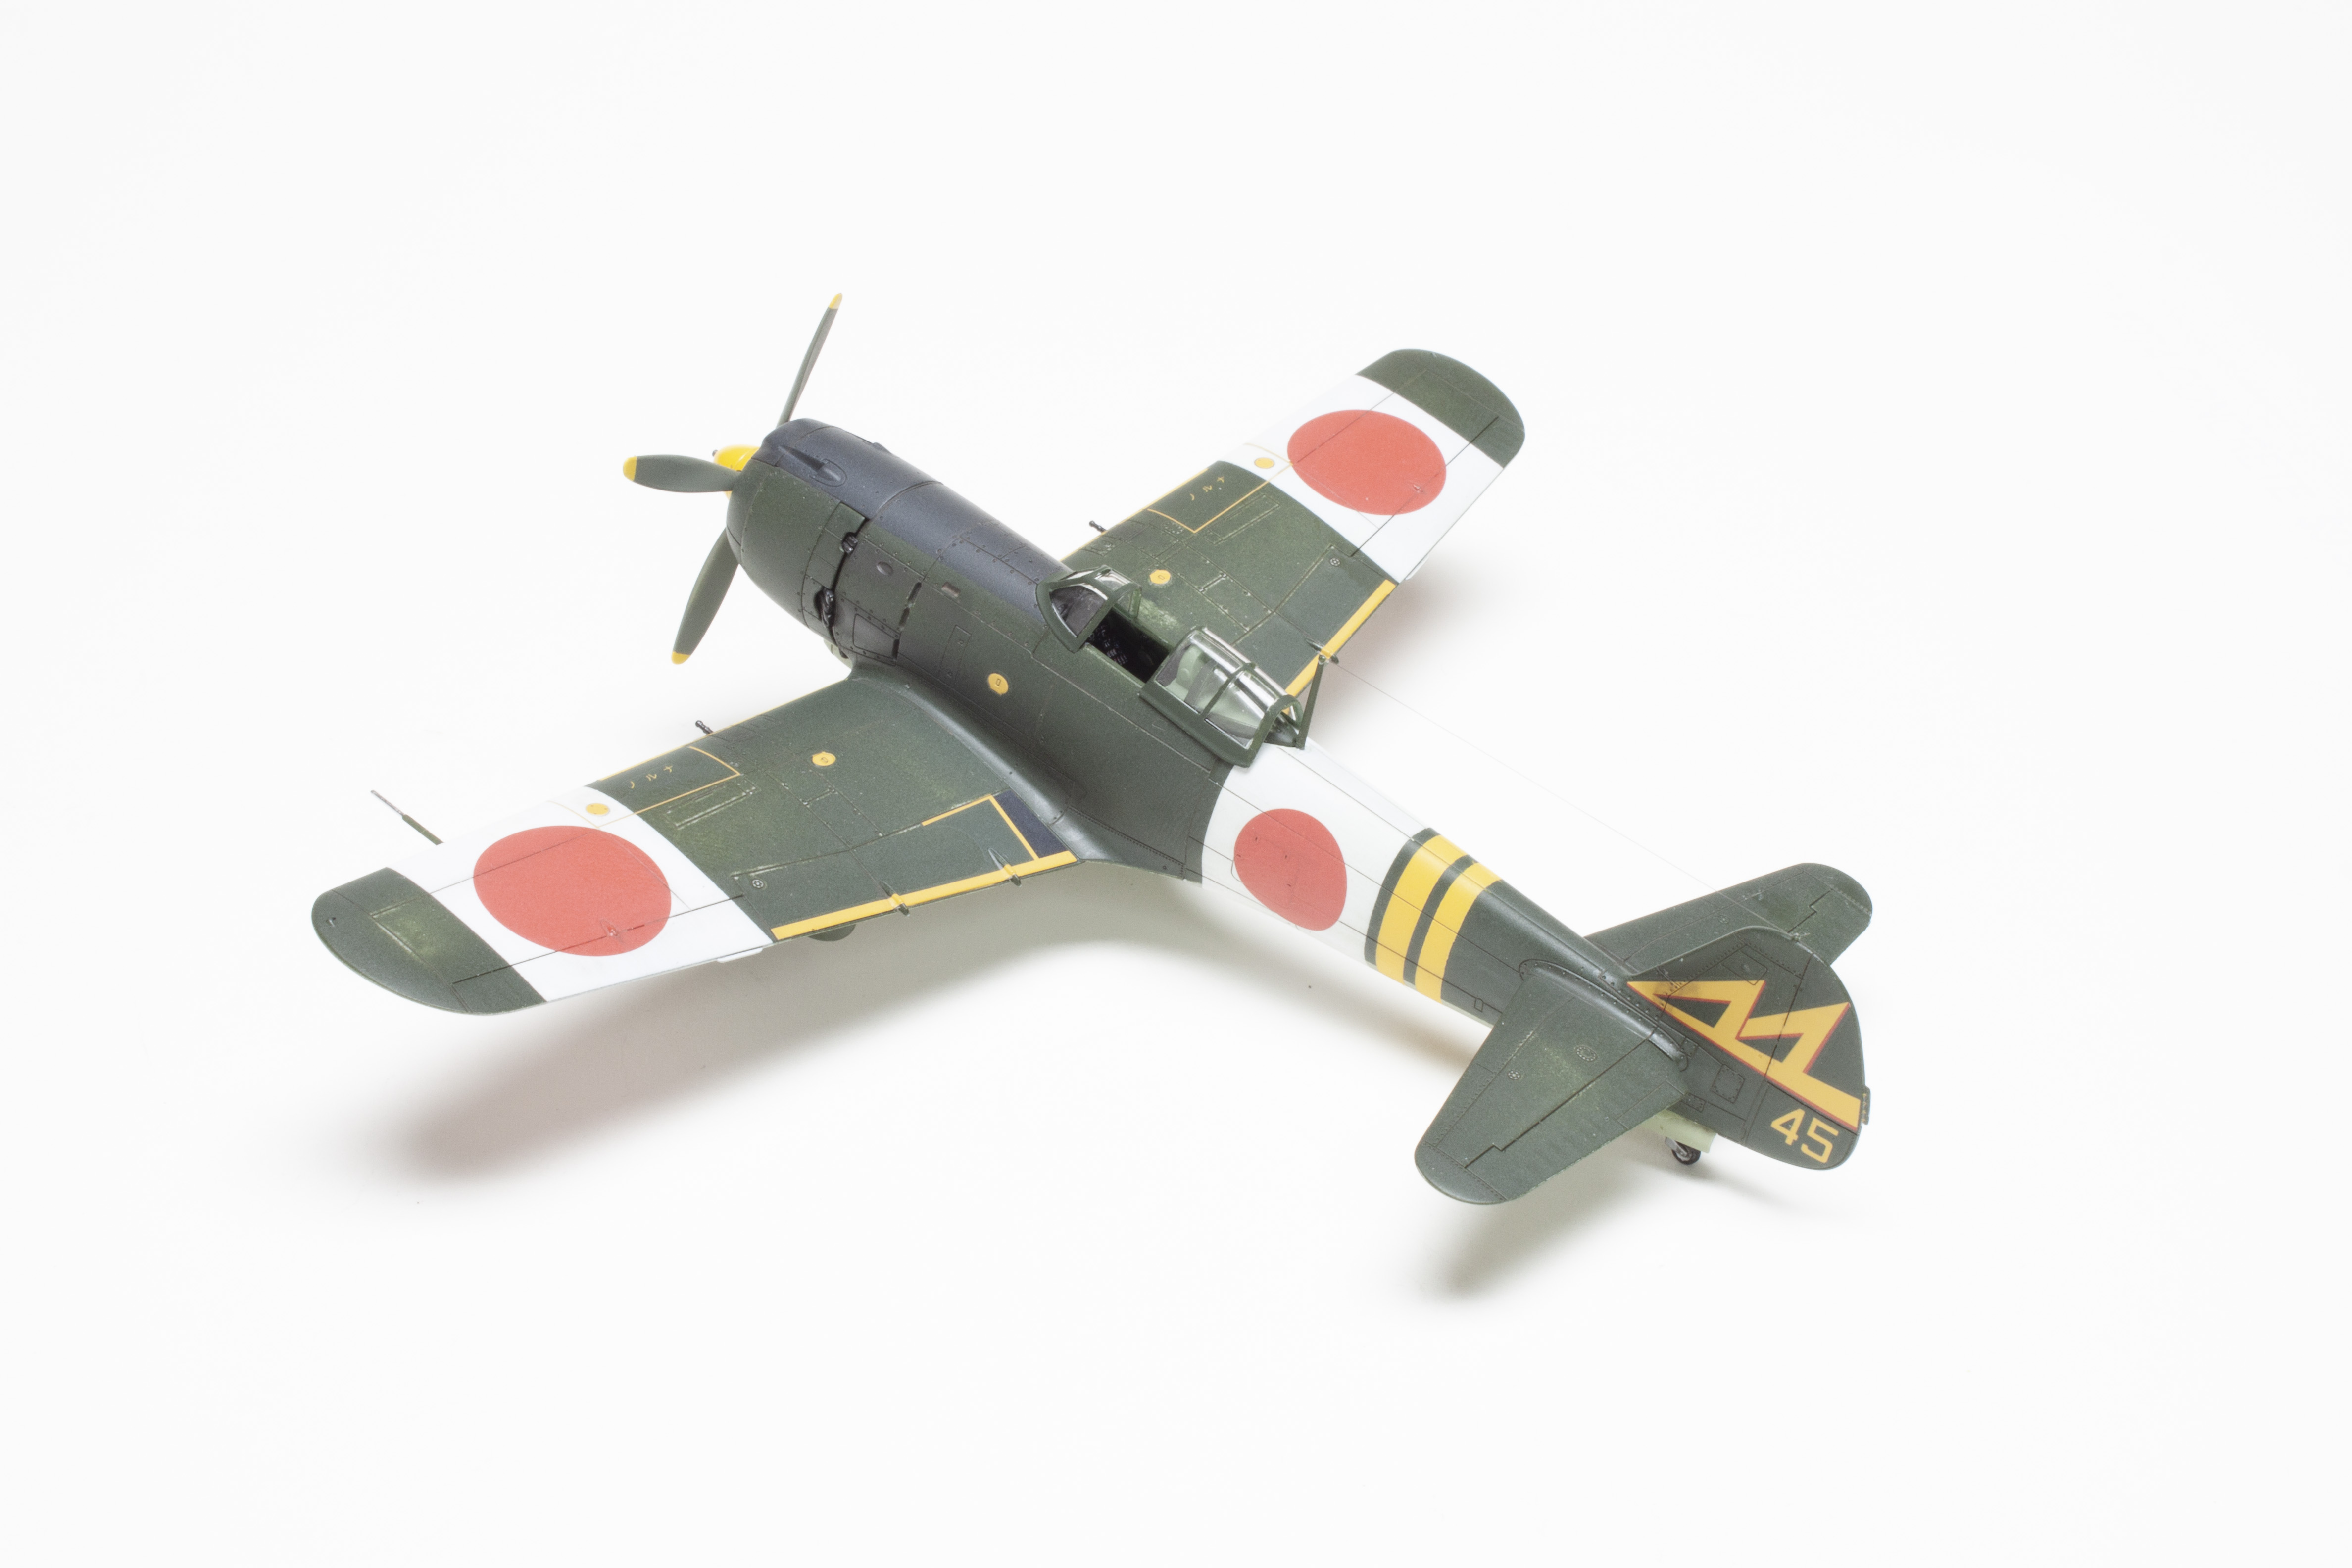 Arma Hobby Kit No. 70052 - Nakajima Ki-84 Hayate Model Kit Review